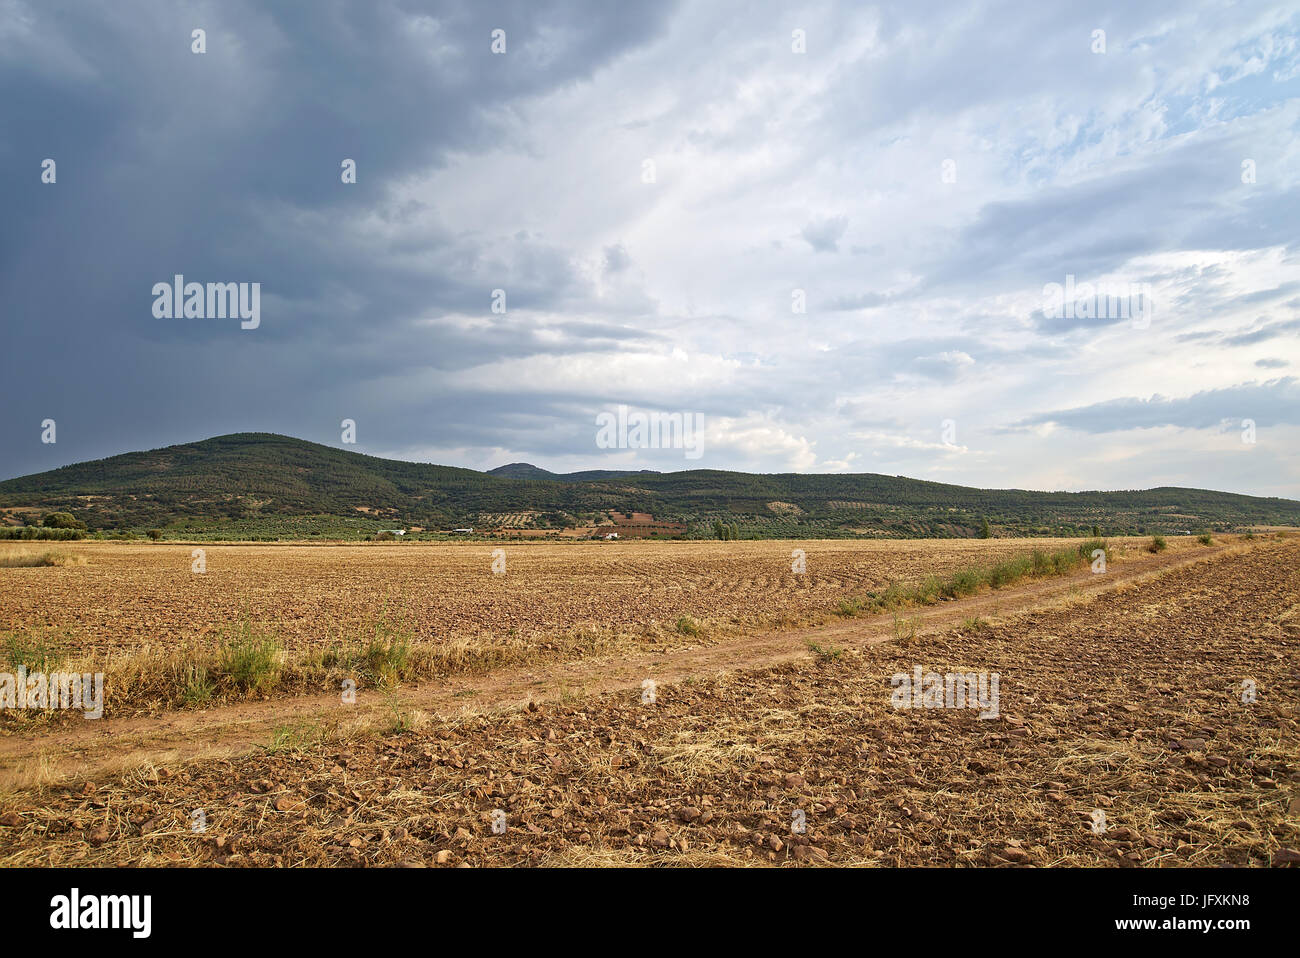 Image of storm starting in La Galinda's Mountains in Toledo, Spain. Landmark taken in Summer, showing the dryness of the terrain. Stock Photo